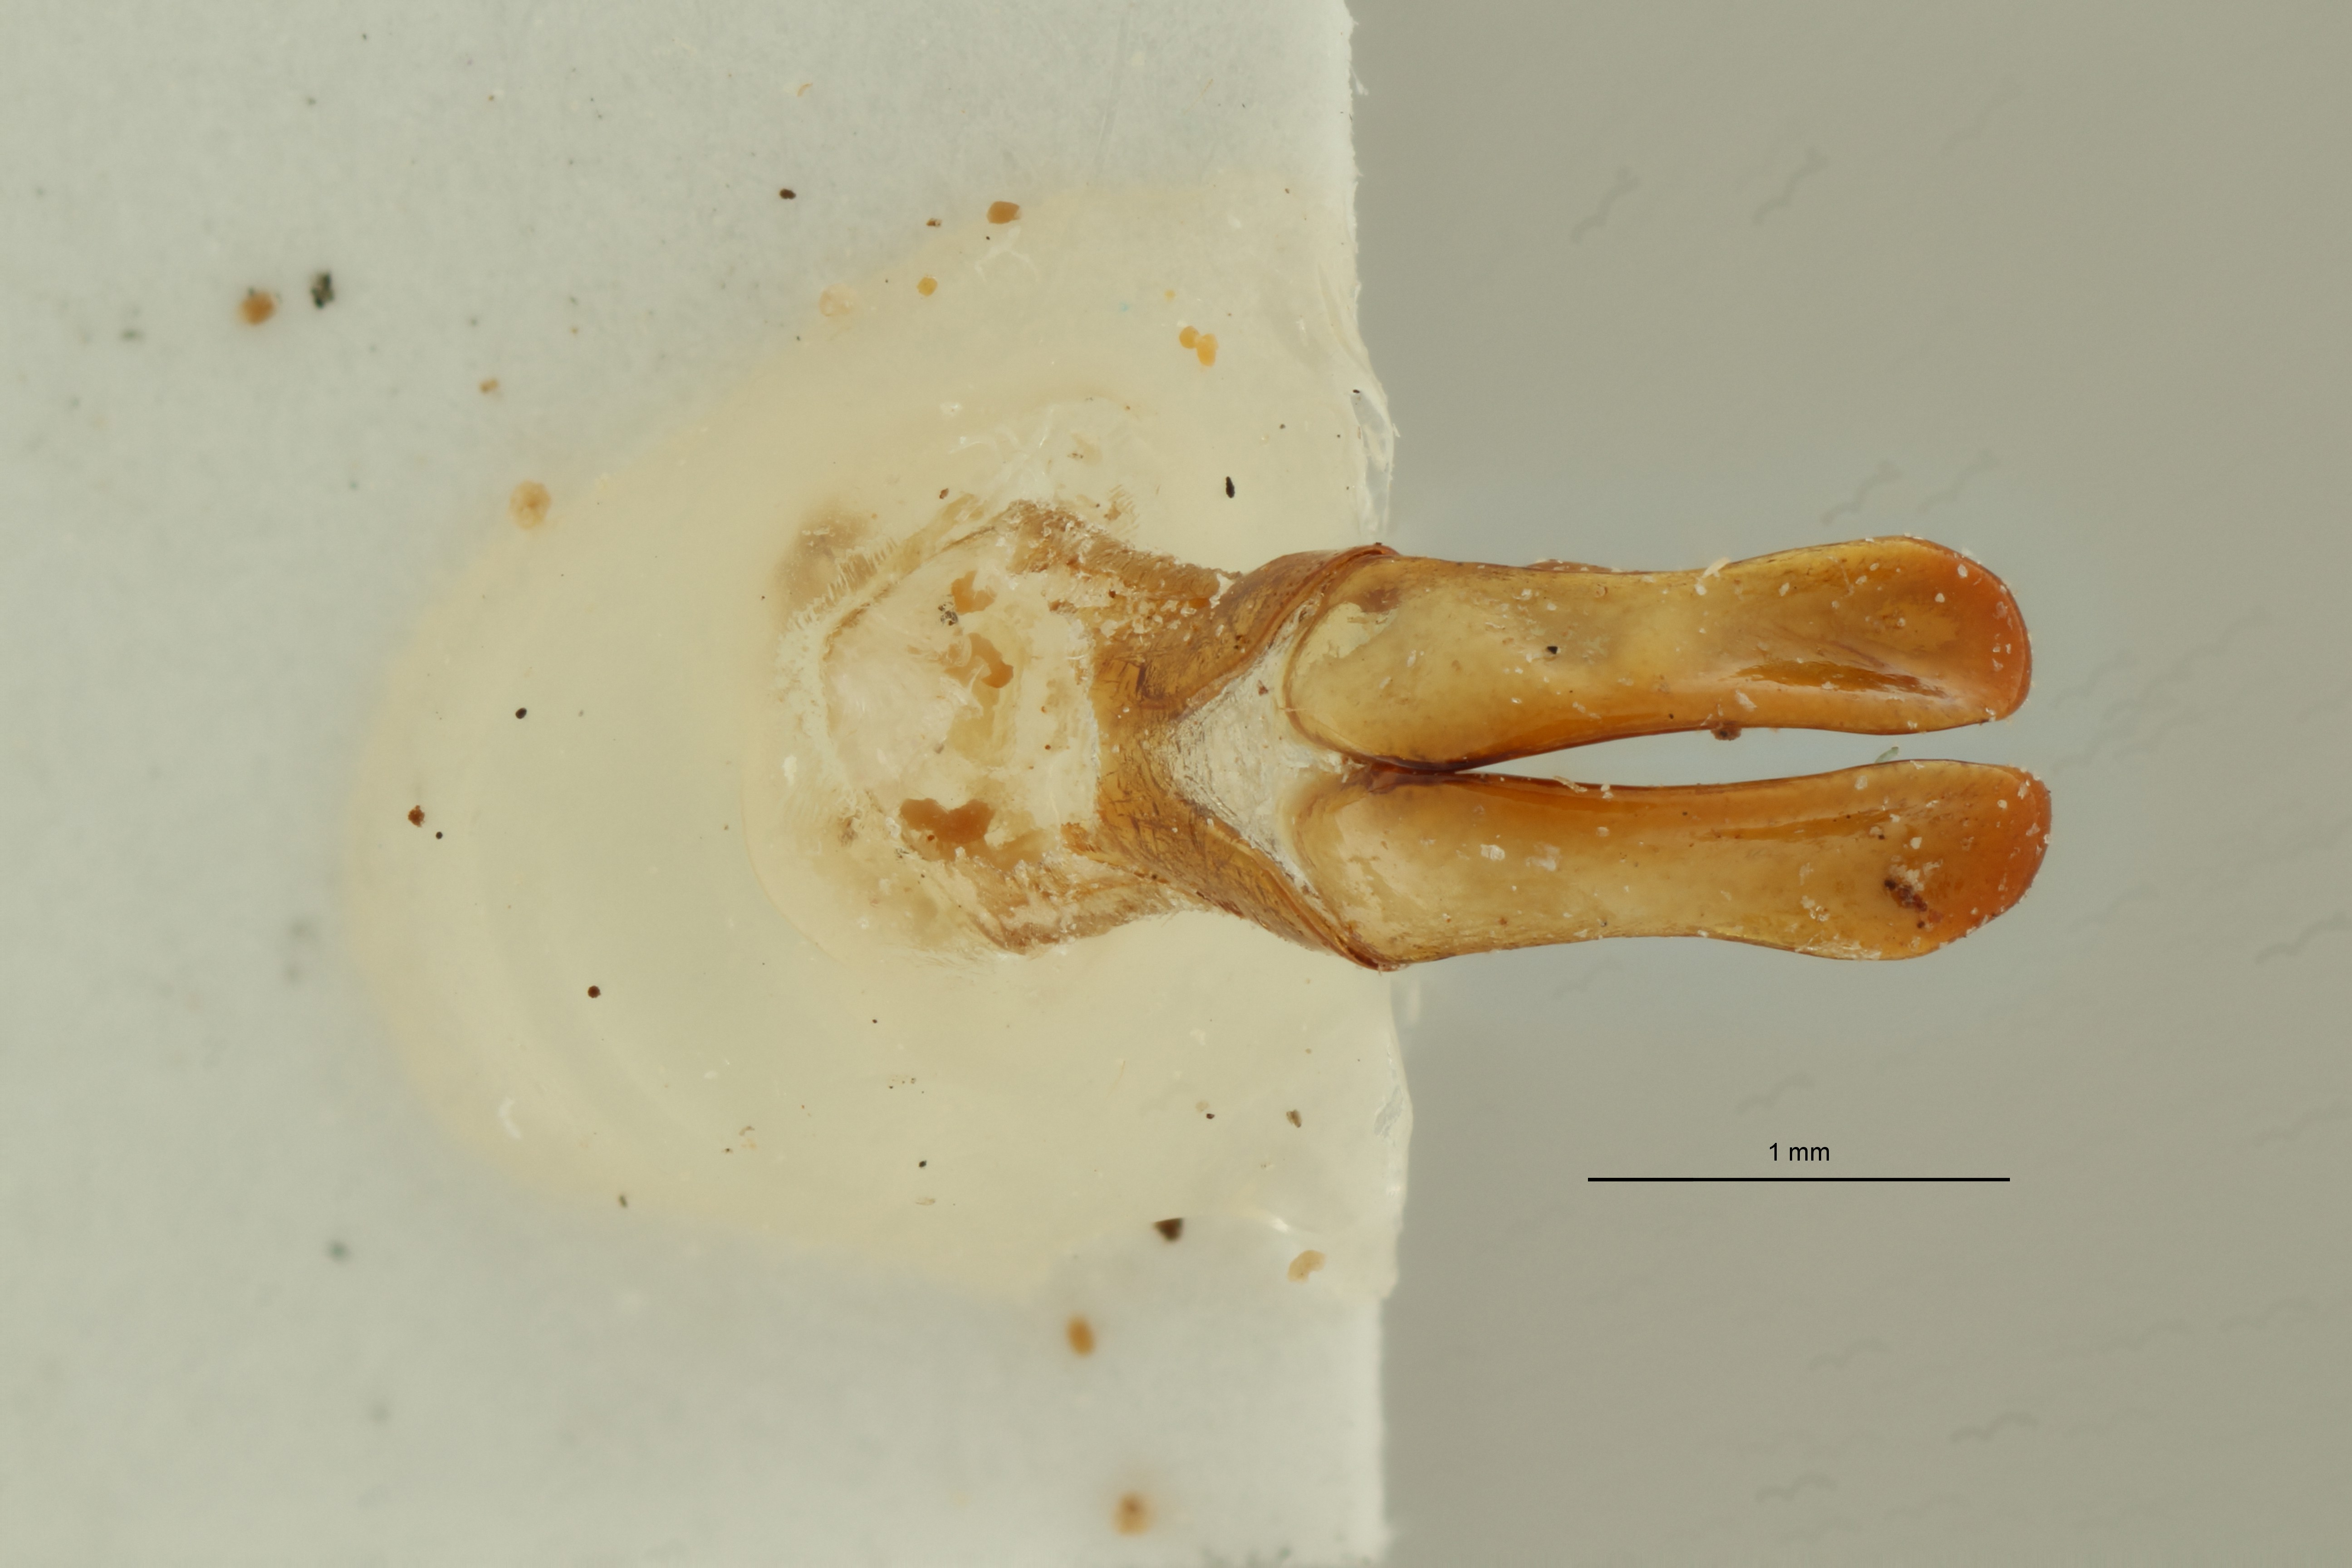 Coelocorynus baleensis ht DG ZS PMax Scaled.jpeg